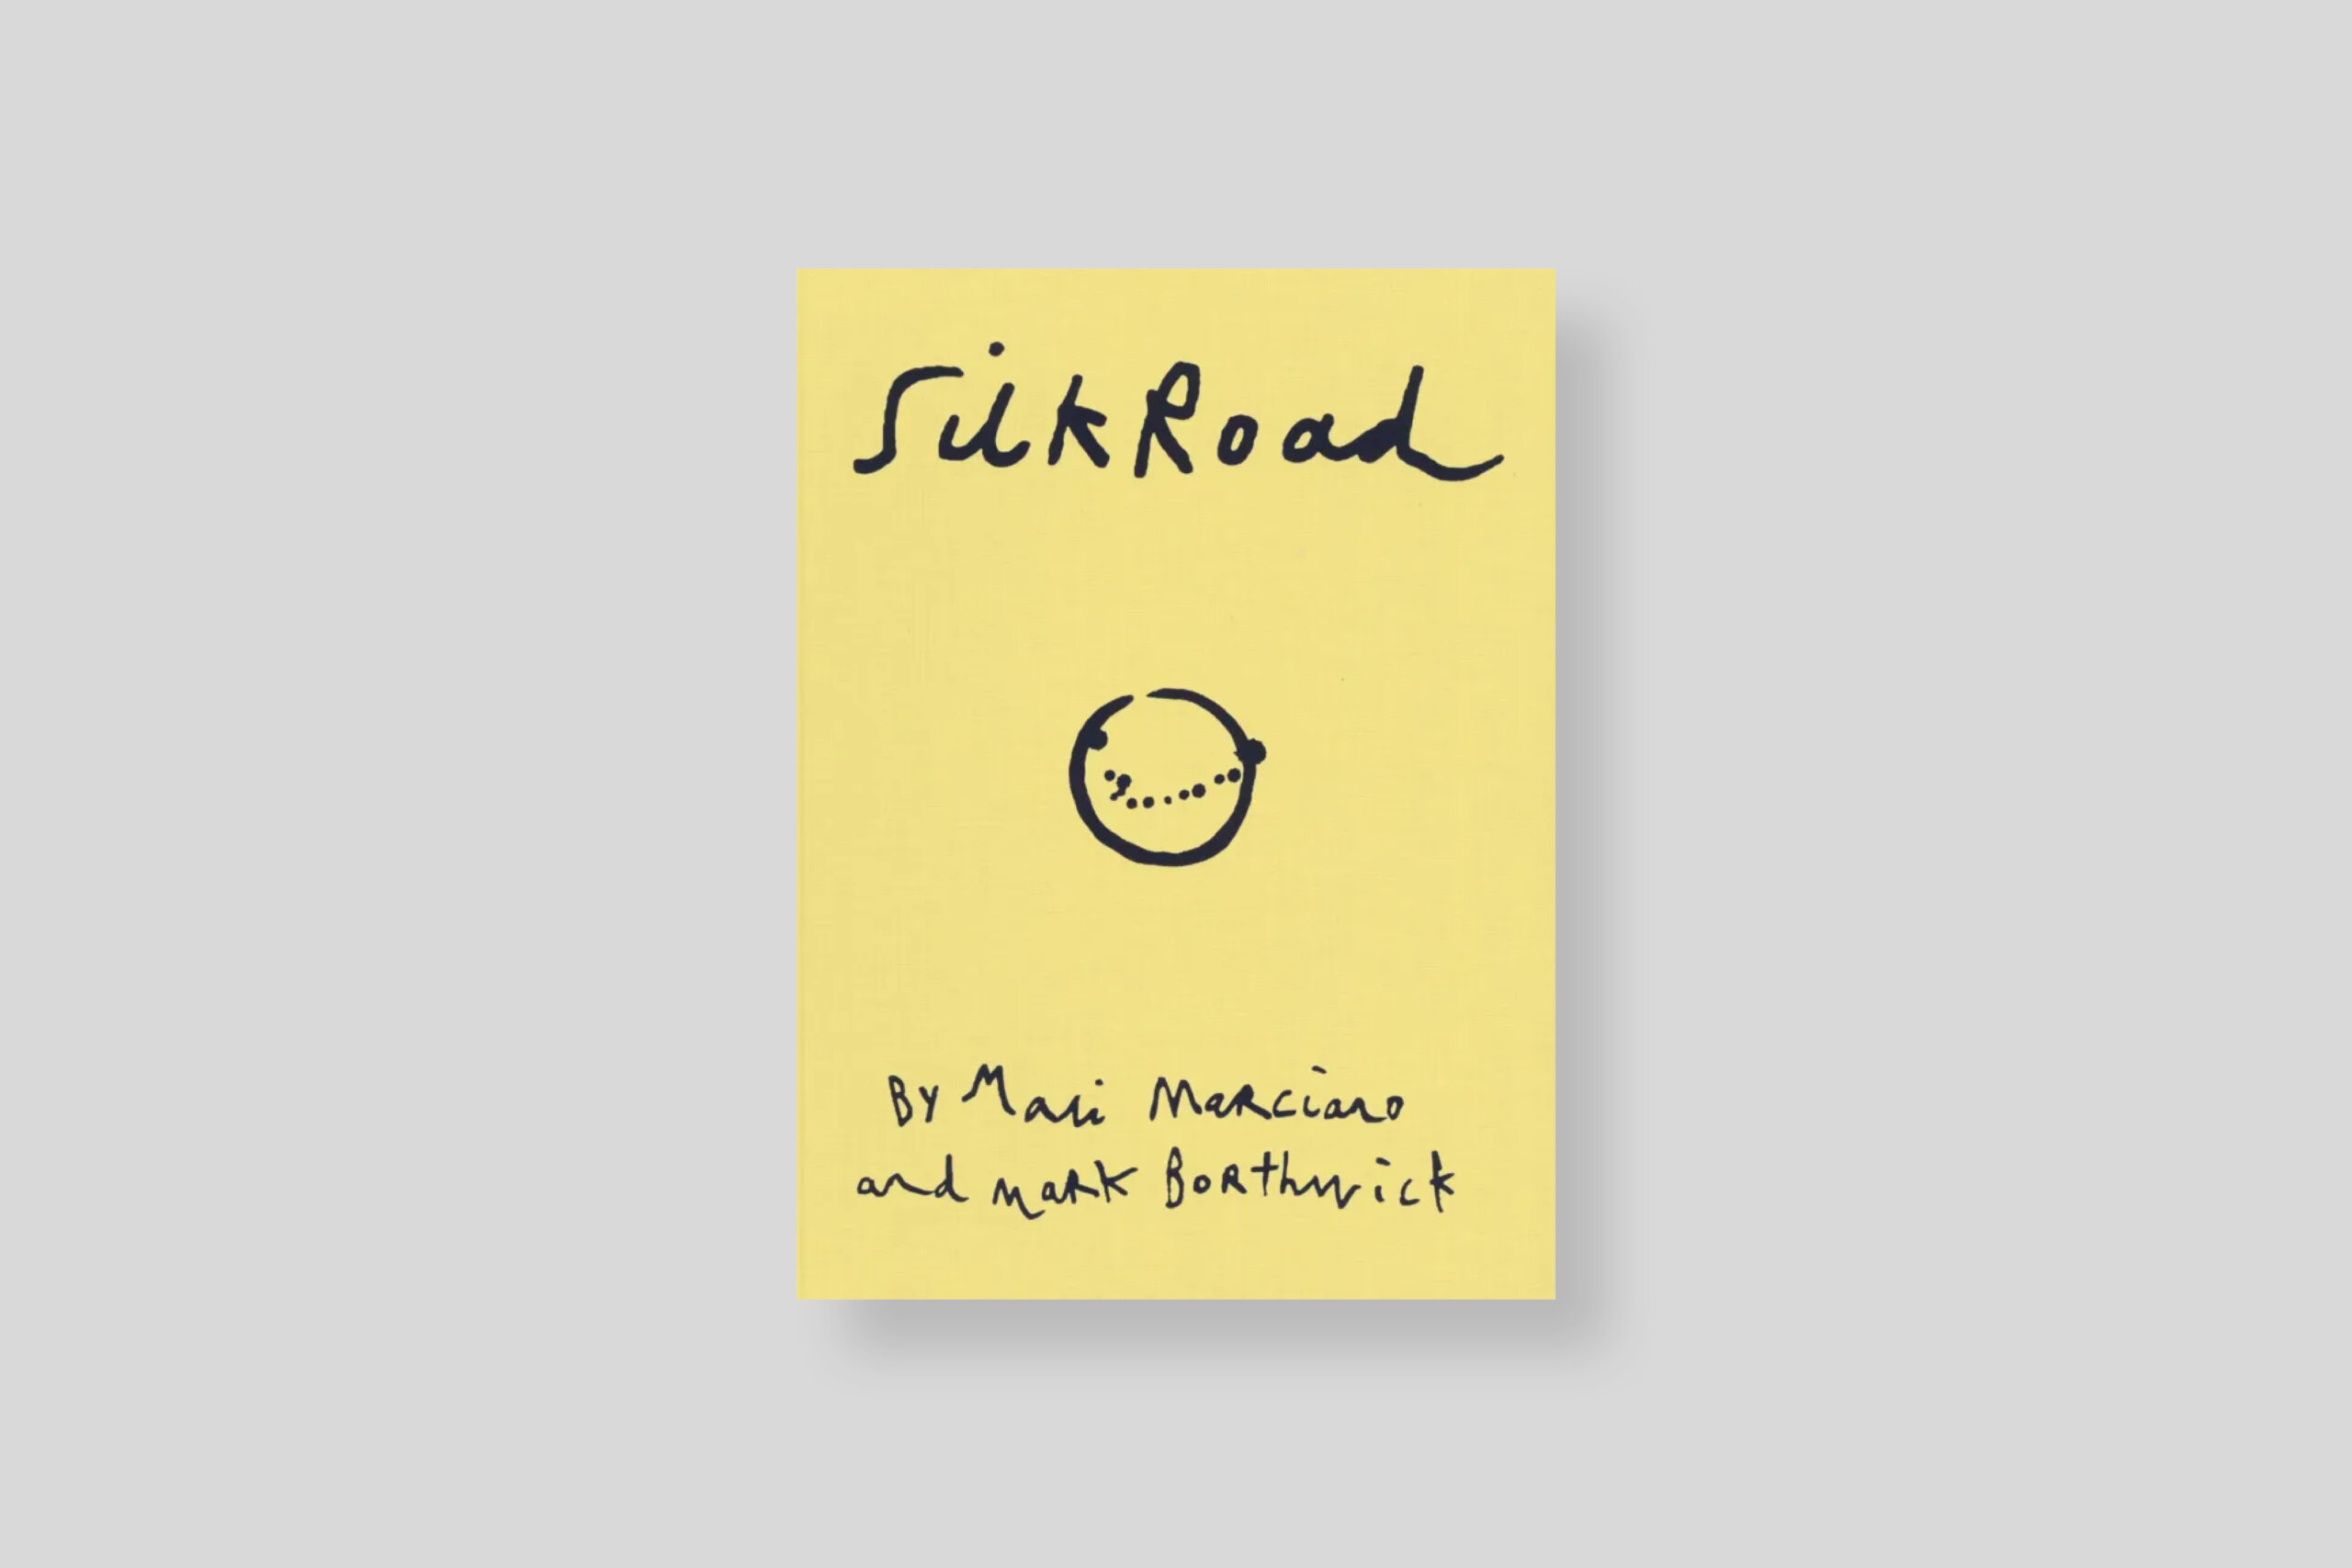 silkroad-borthwick-marciano-ofr-editions-cover